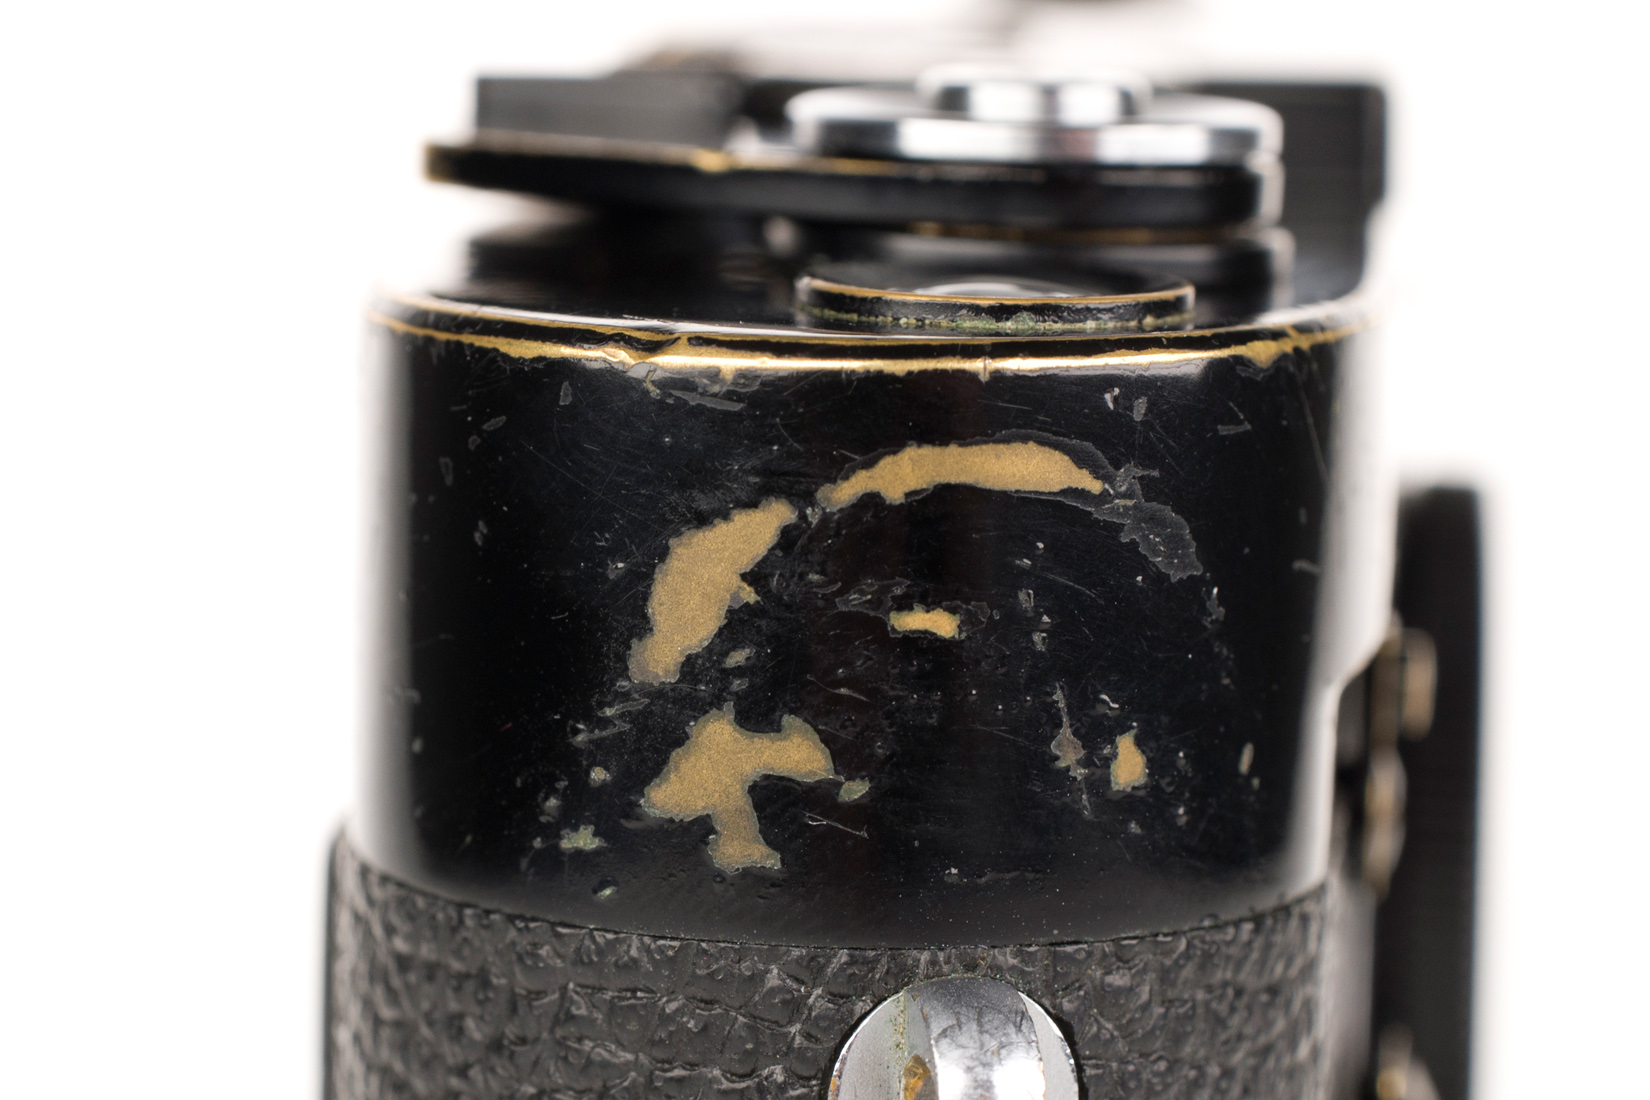 Leica M4, black paint, first batch